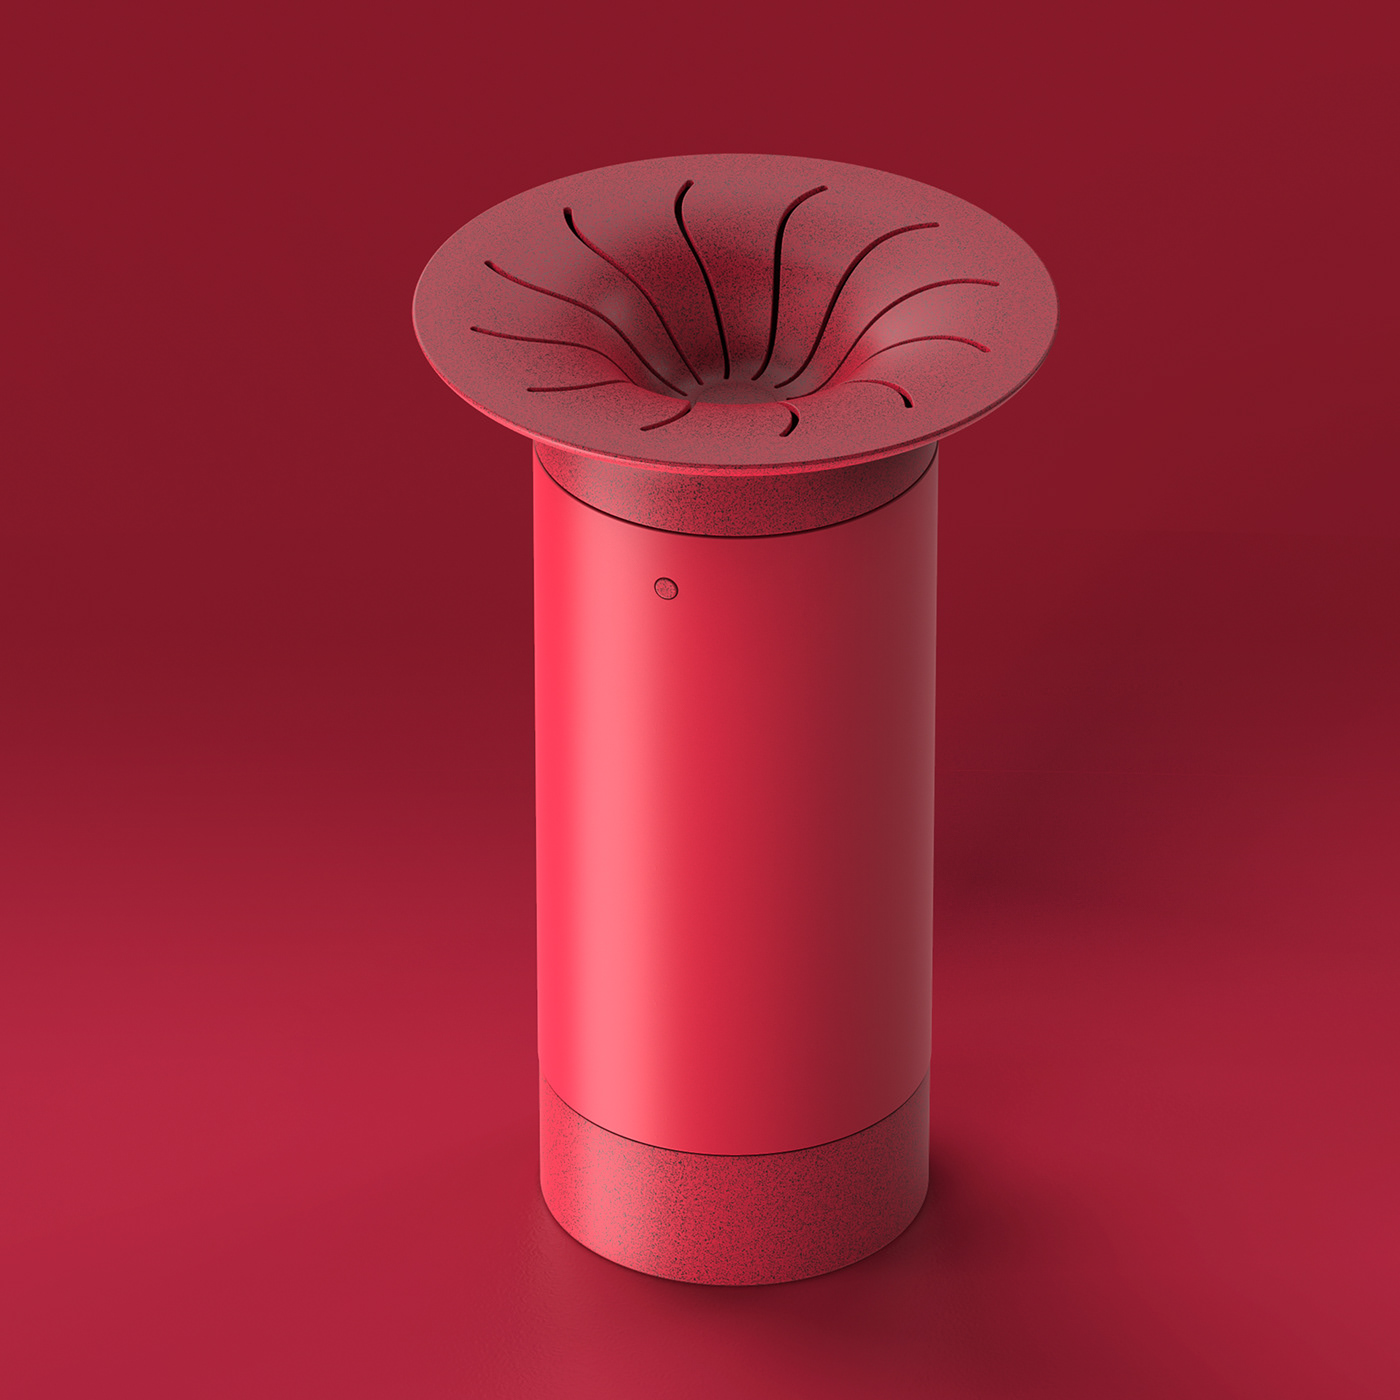 Pepper Shaker product design Render rendering 3D 3D model red modeling